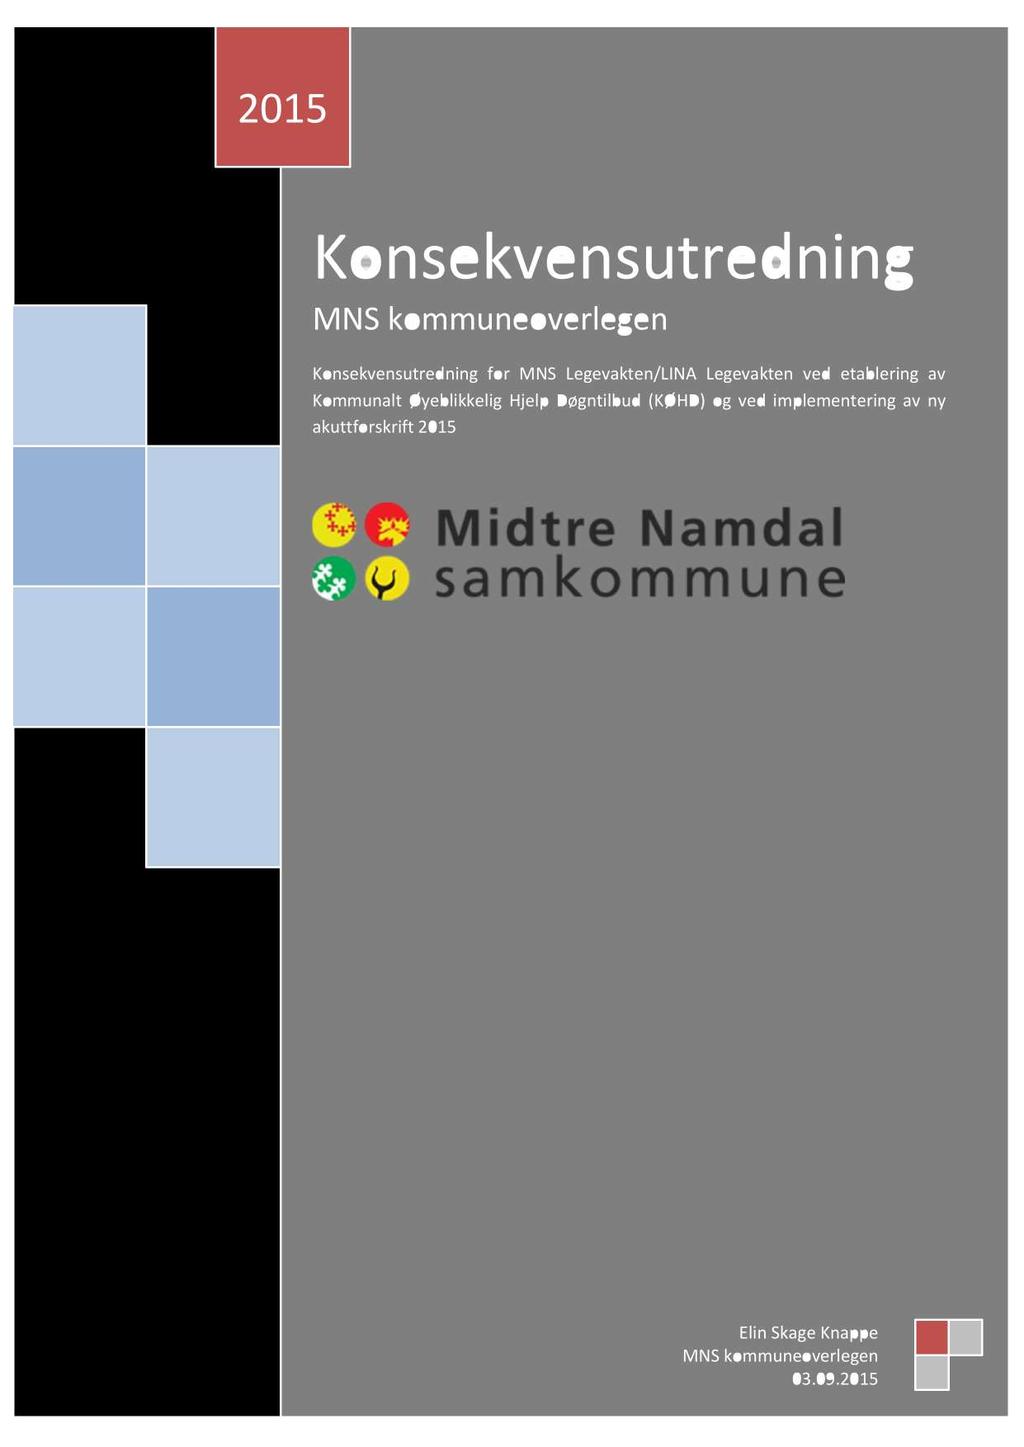 Konsekvensutredning MNS kommuneoverlegen 201503. 09.